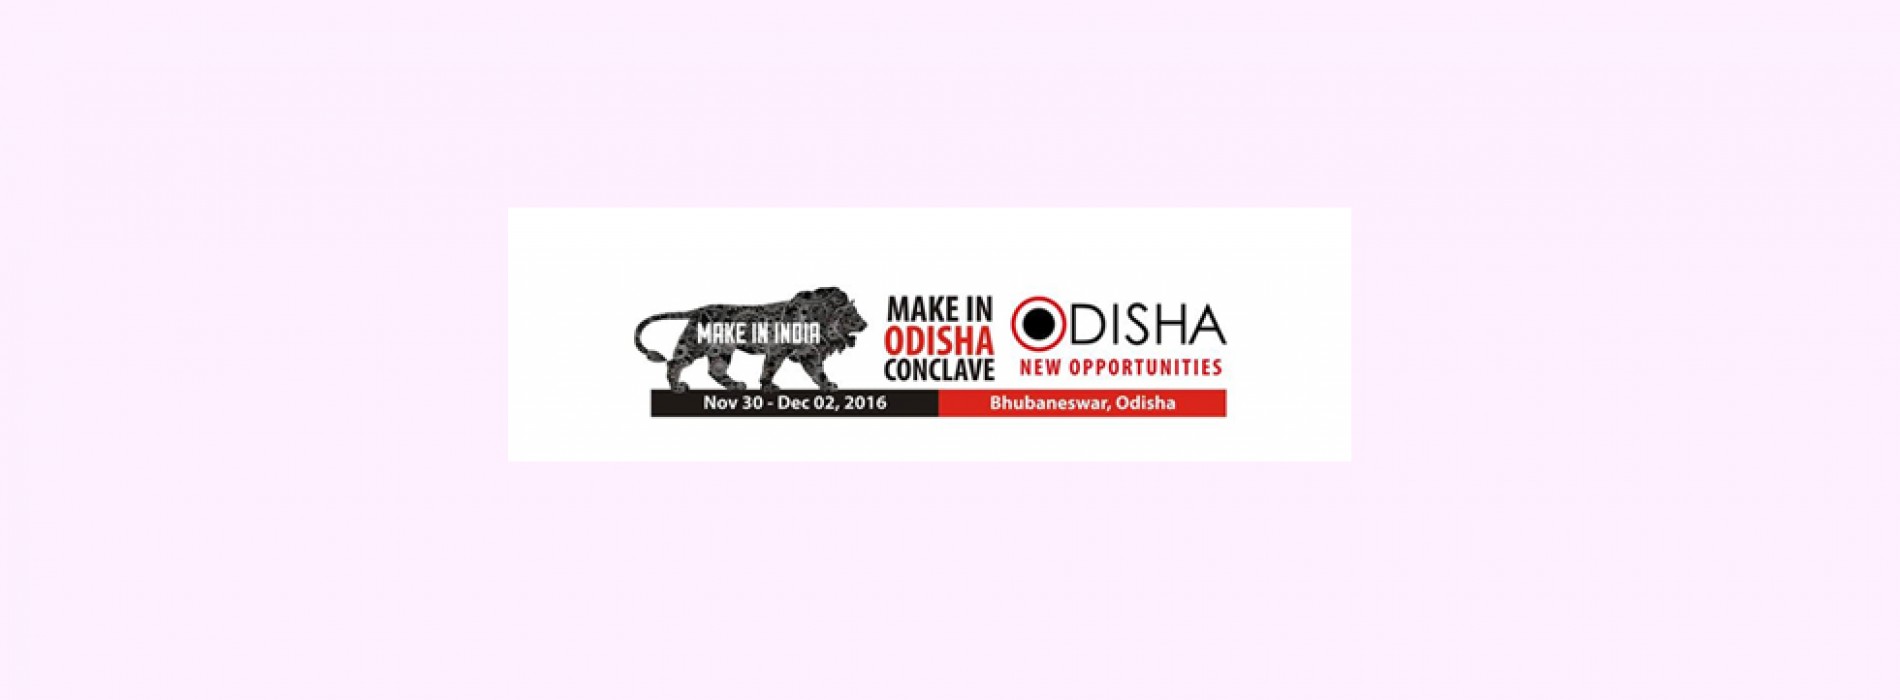 Odisha introduces land regulation for industrial development